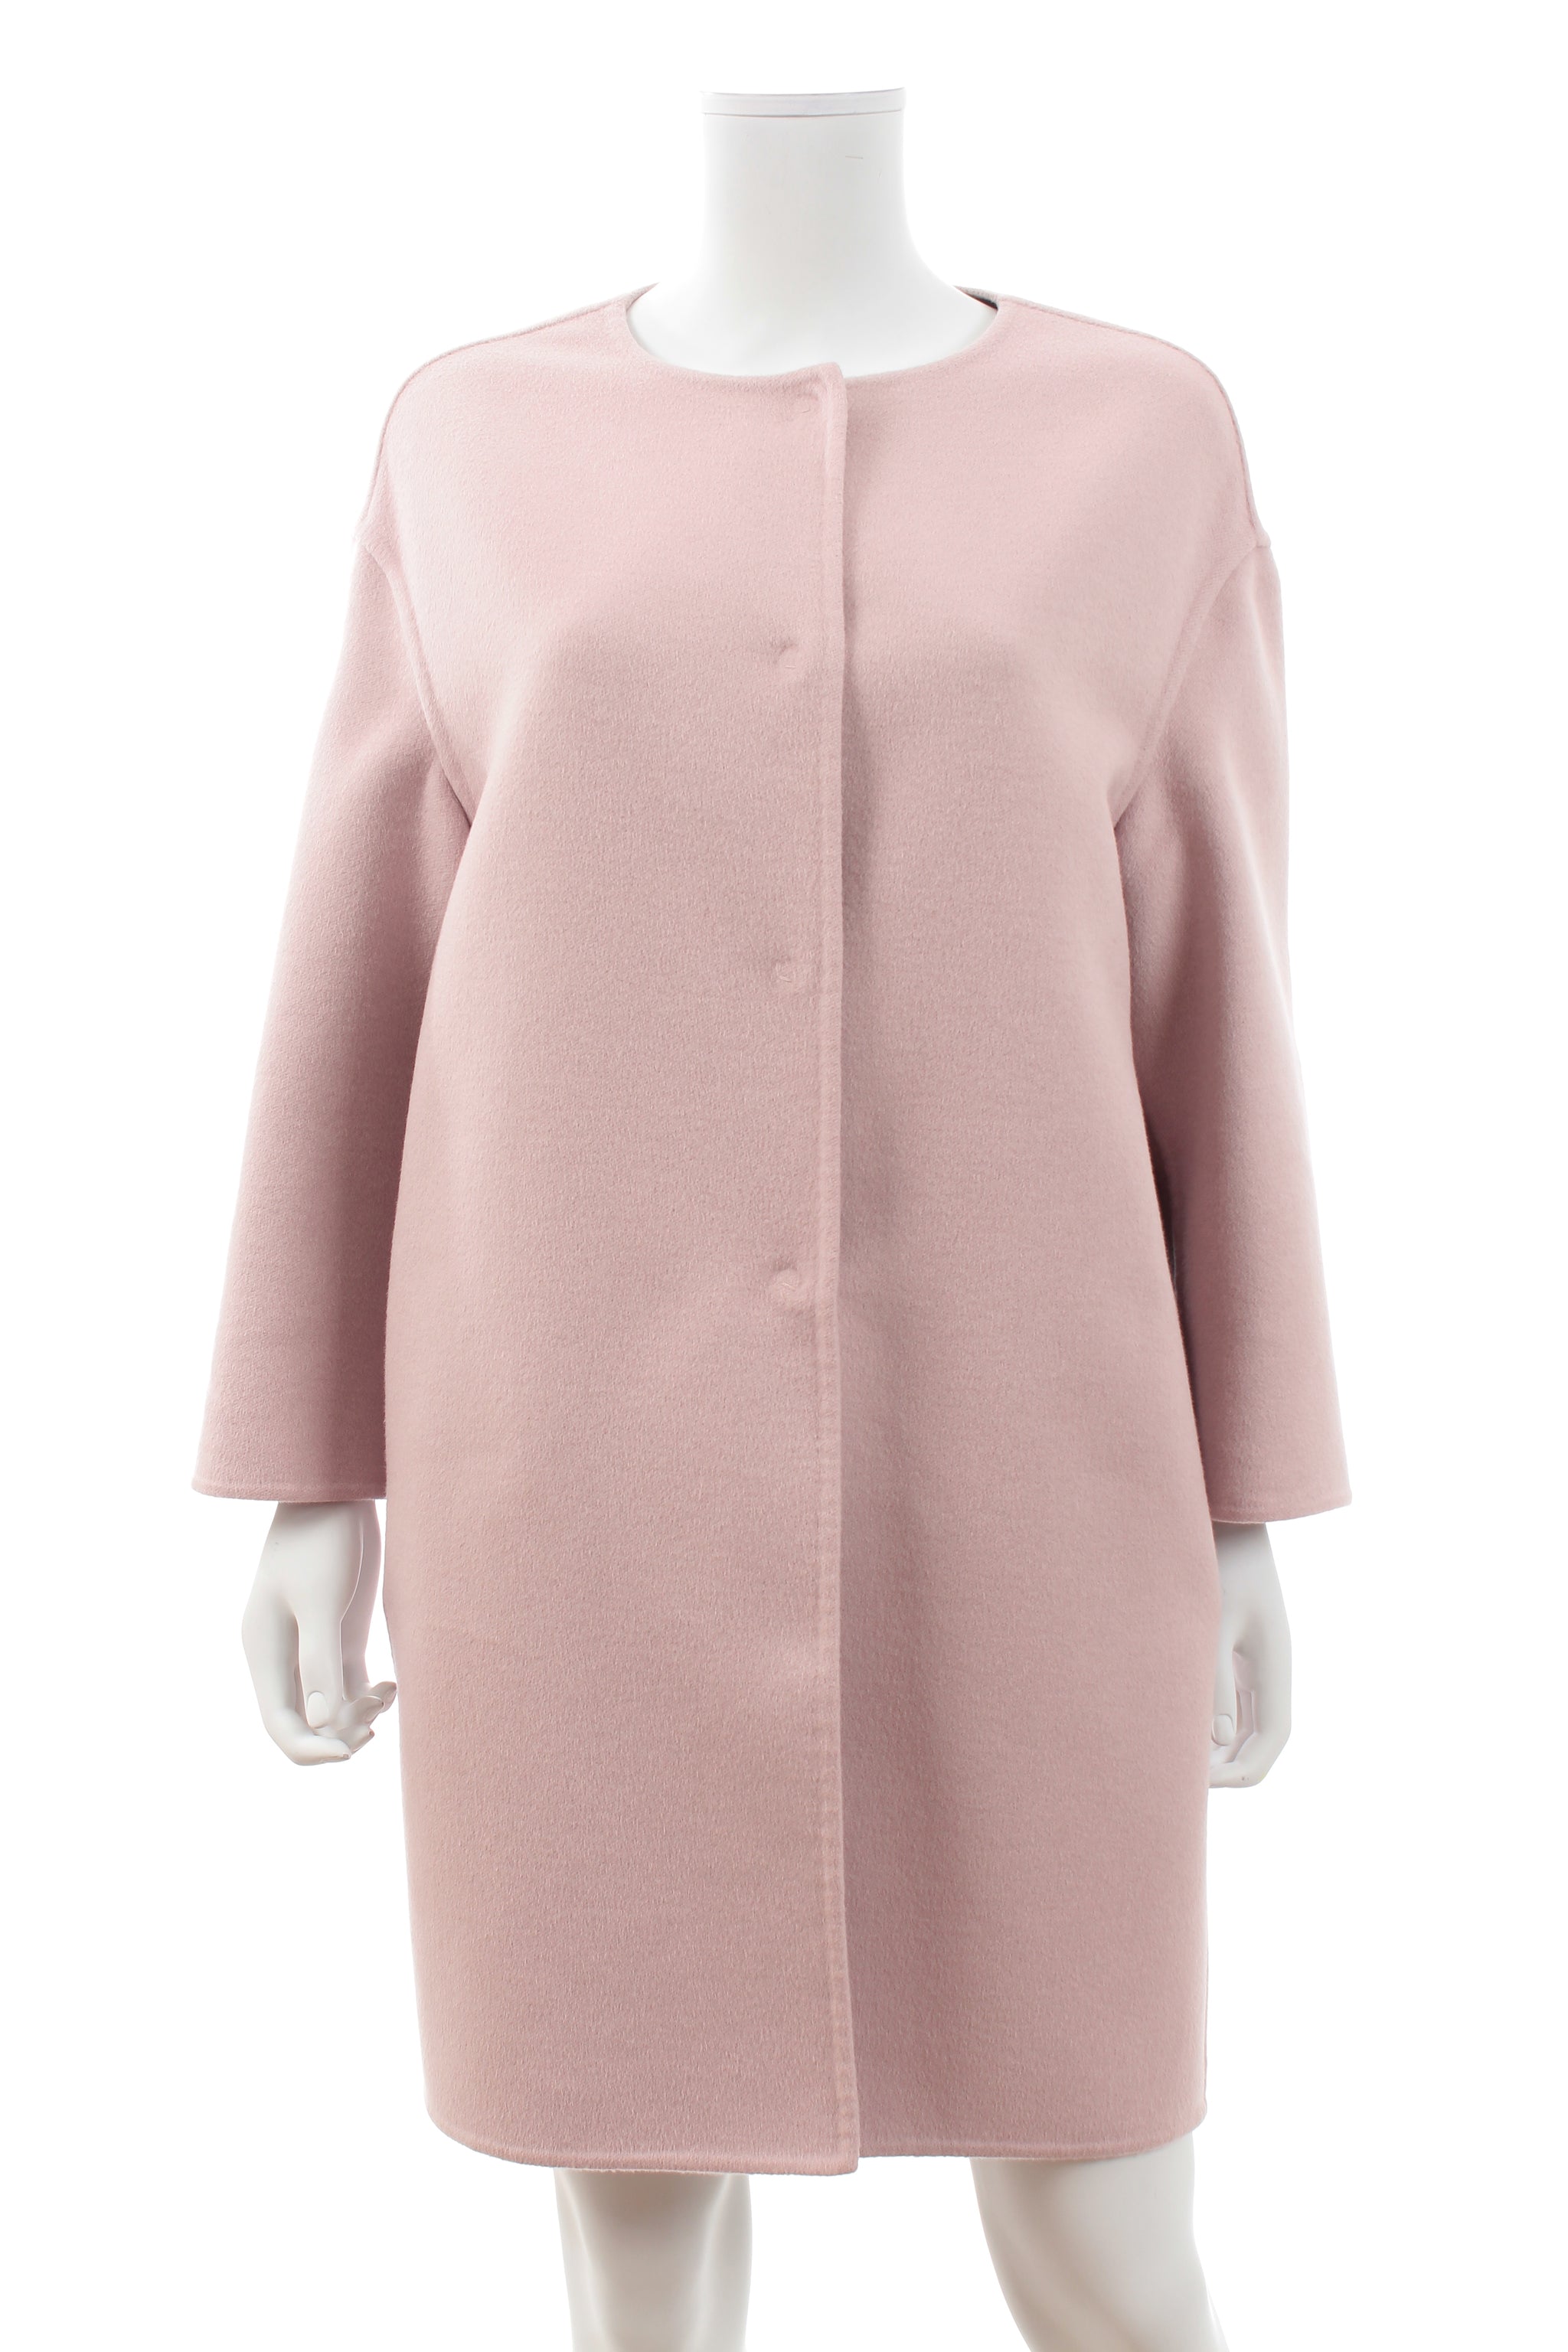 Prada Collarless Wool-Angora-Cashmere Coat - Closet Upgrade